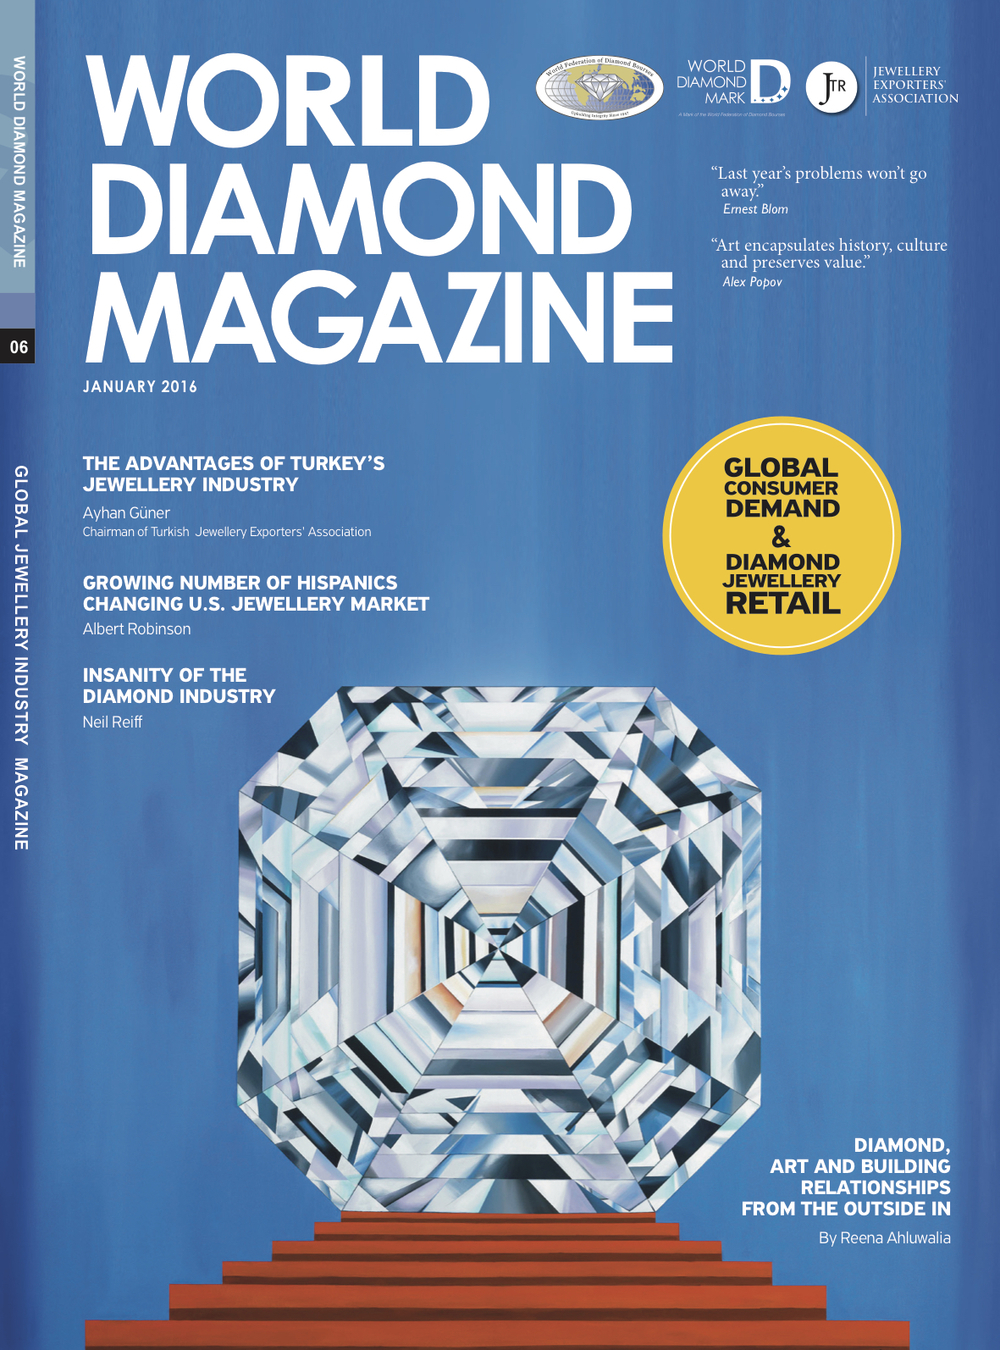 World Diamond Magazine_Reena Ahluwalia_Ya'akov Almor